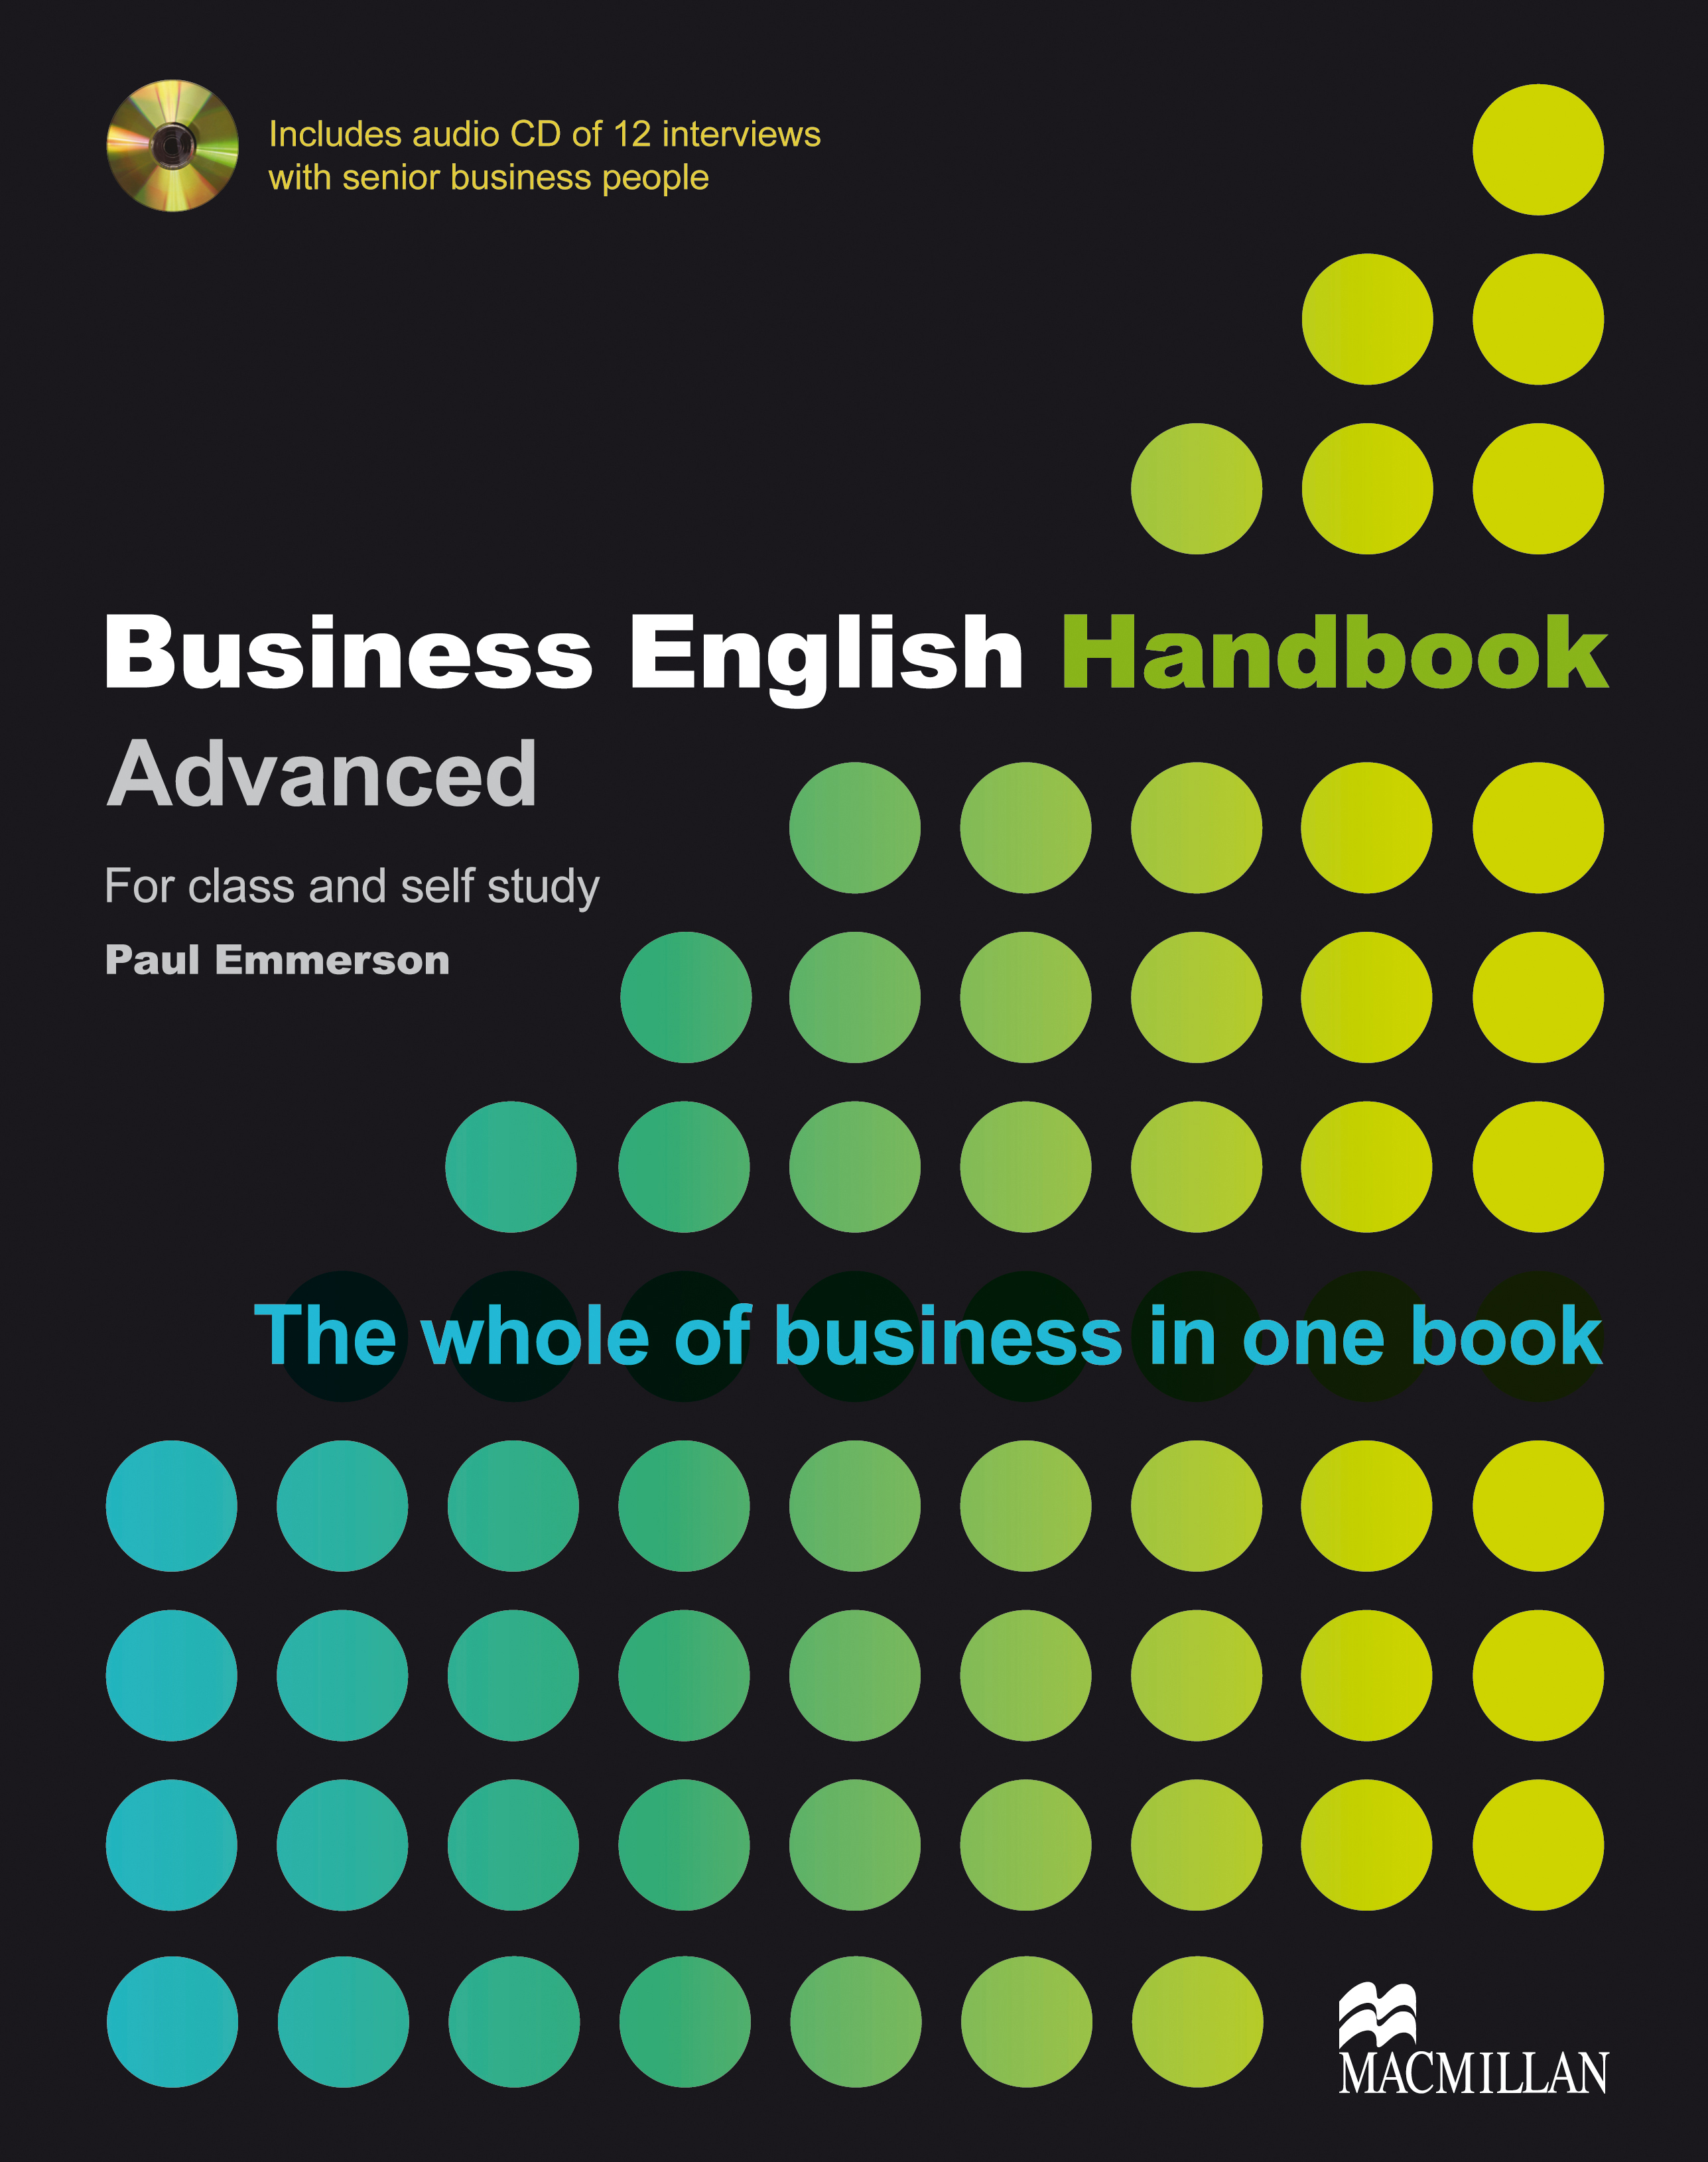 business english presentations pdf